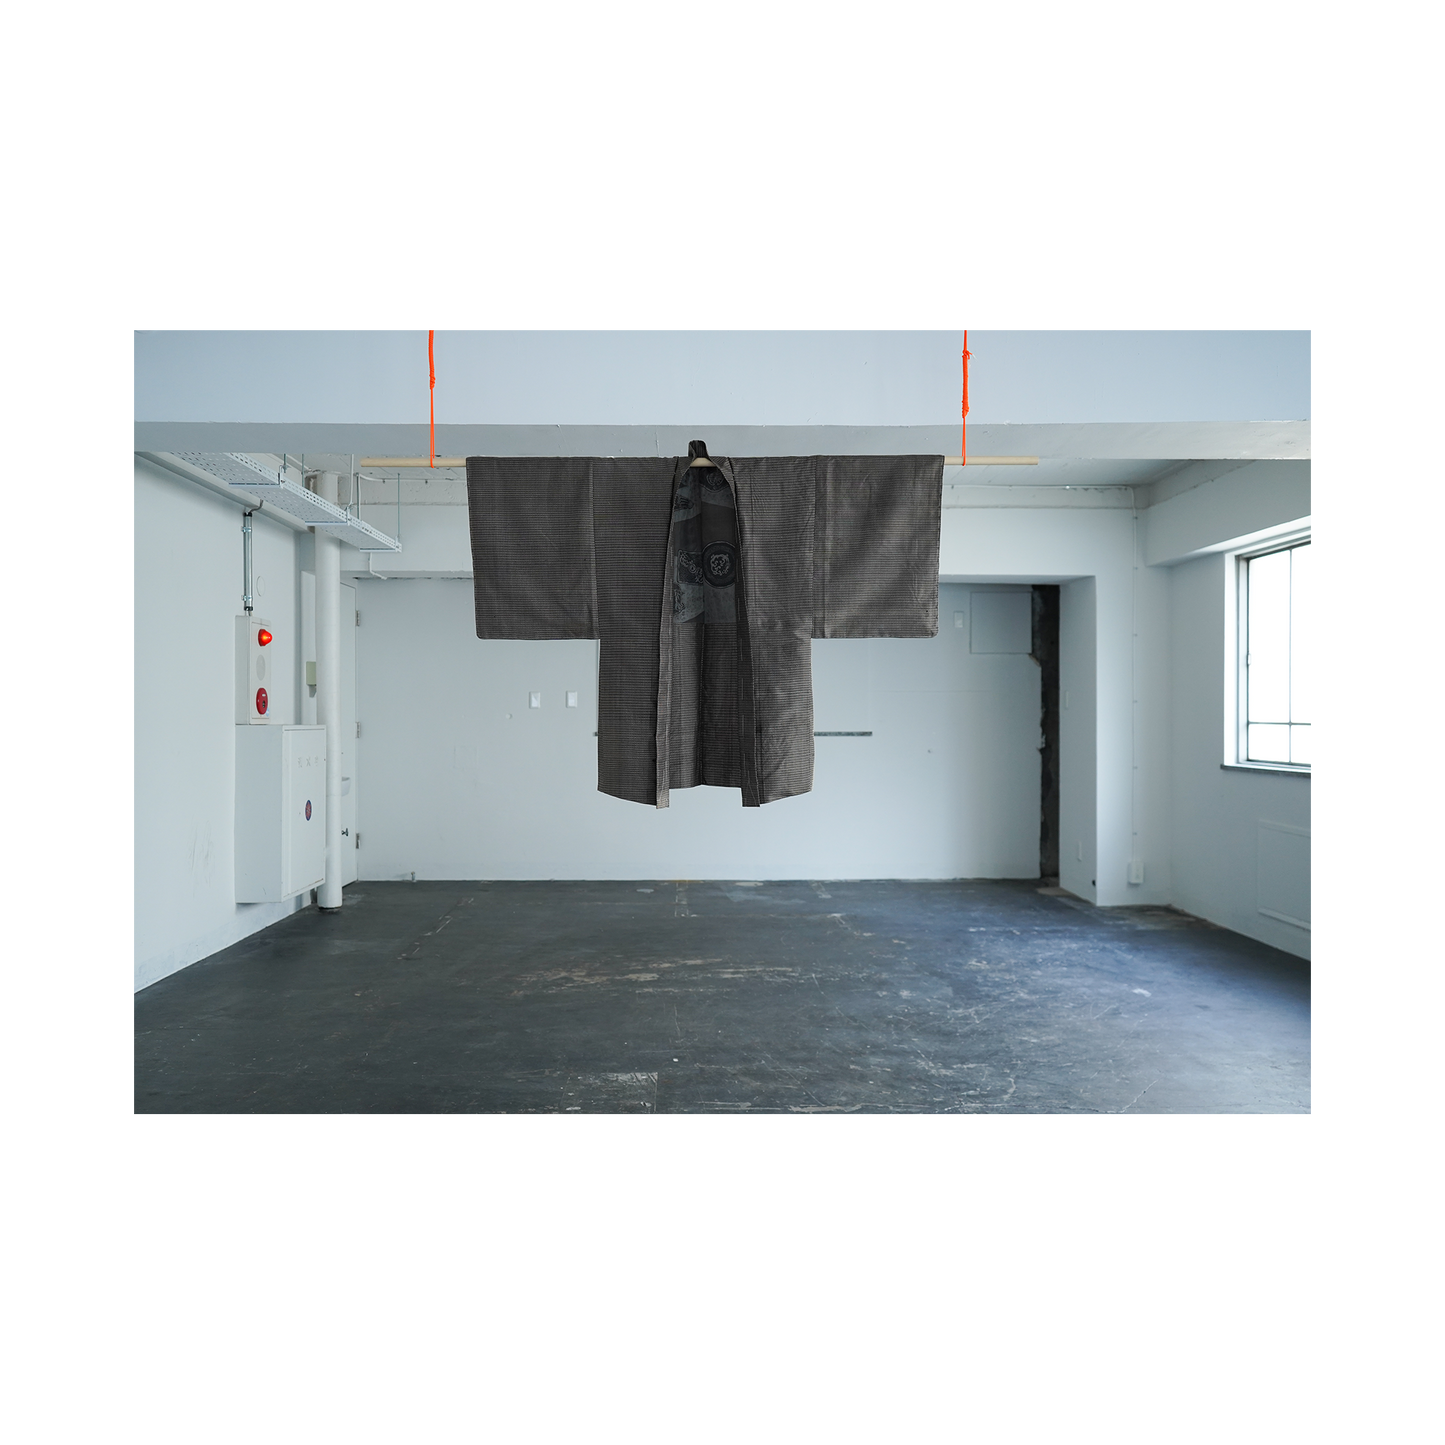 Kimono Working Shirts - Brown 01 L